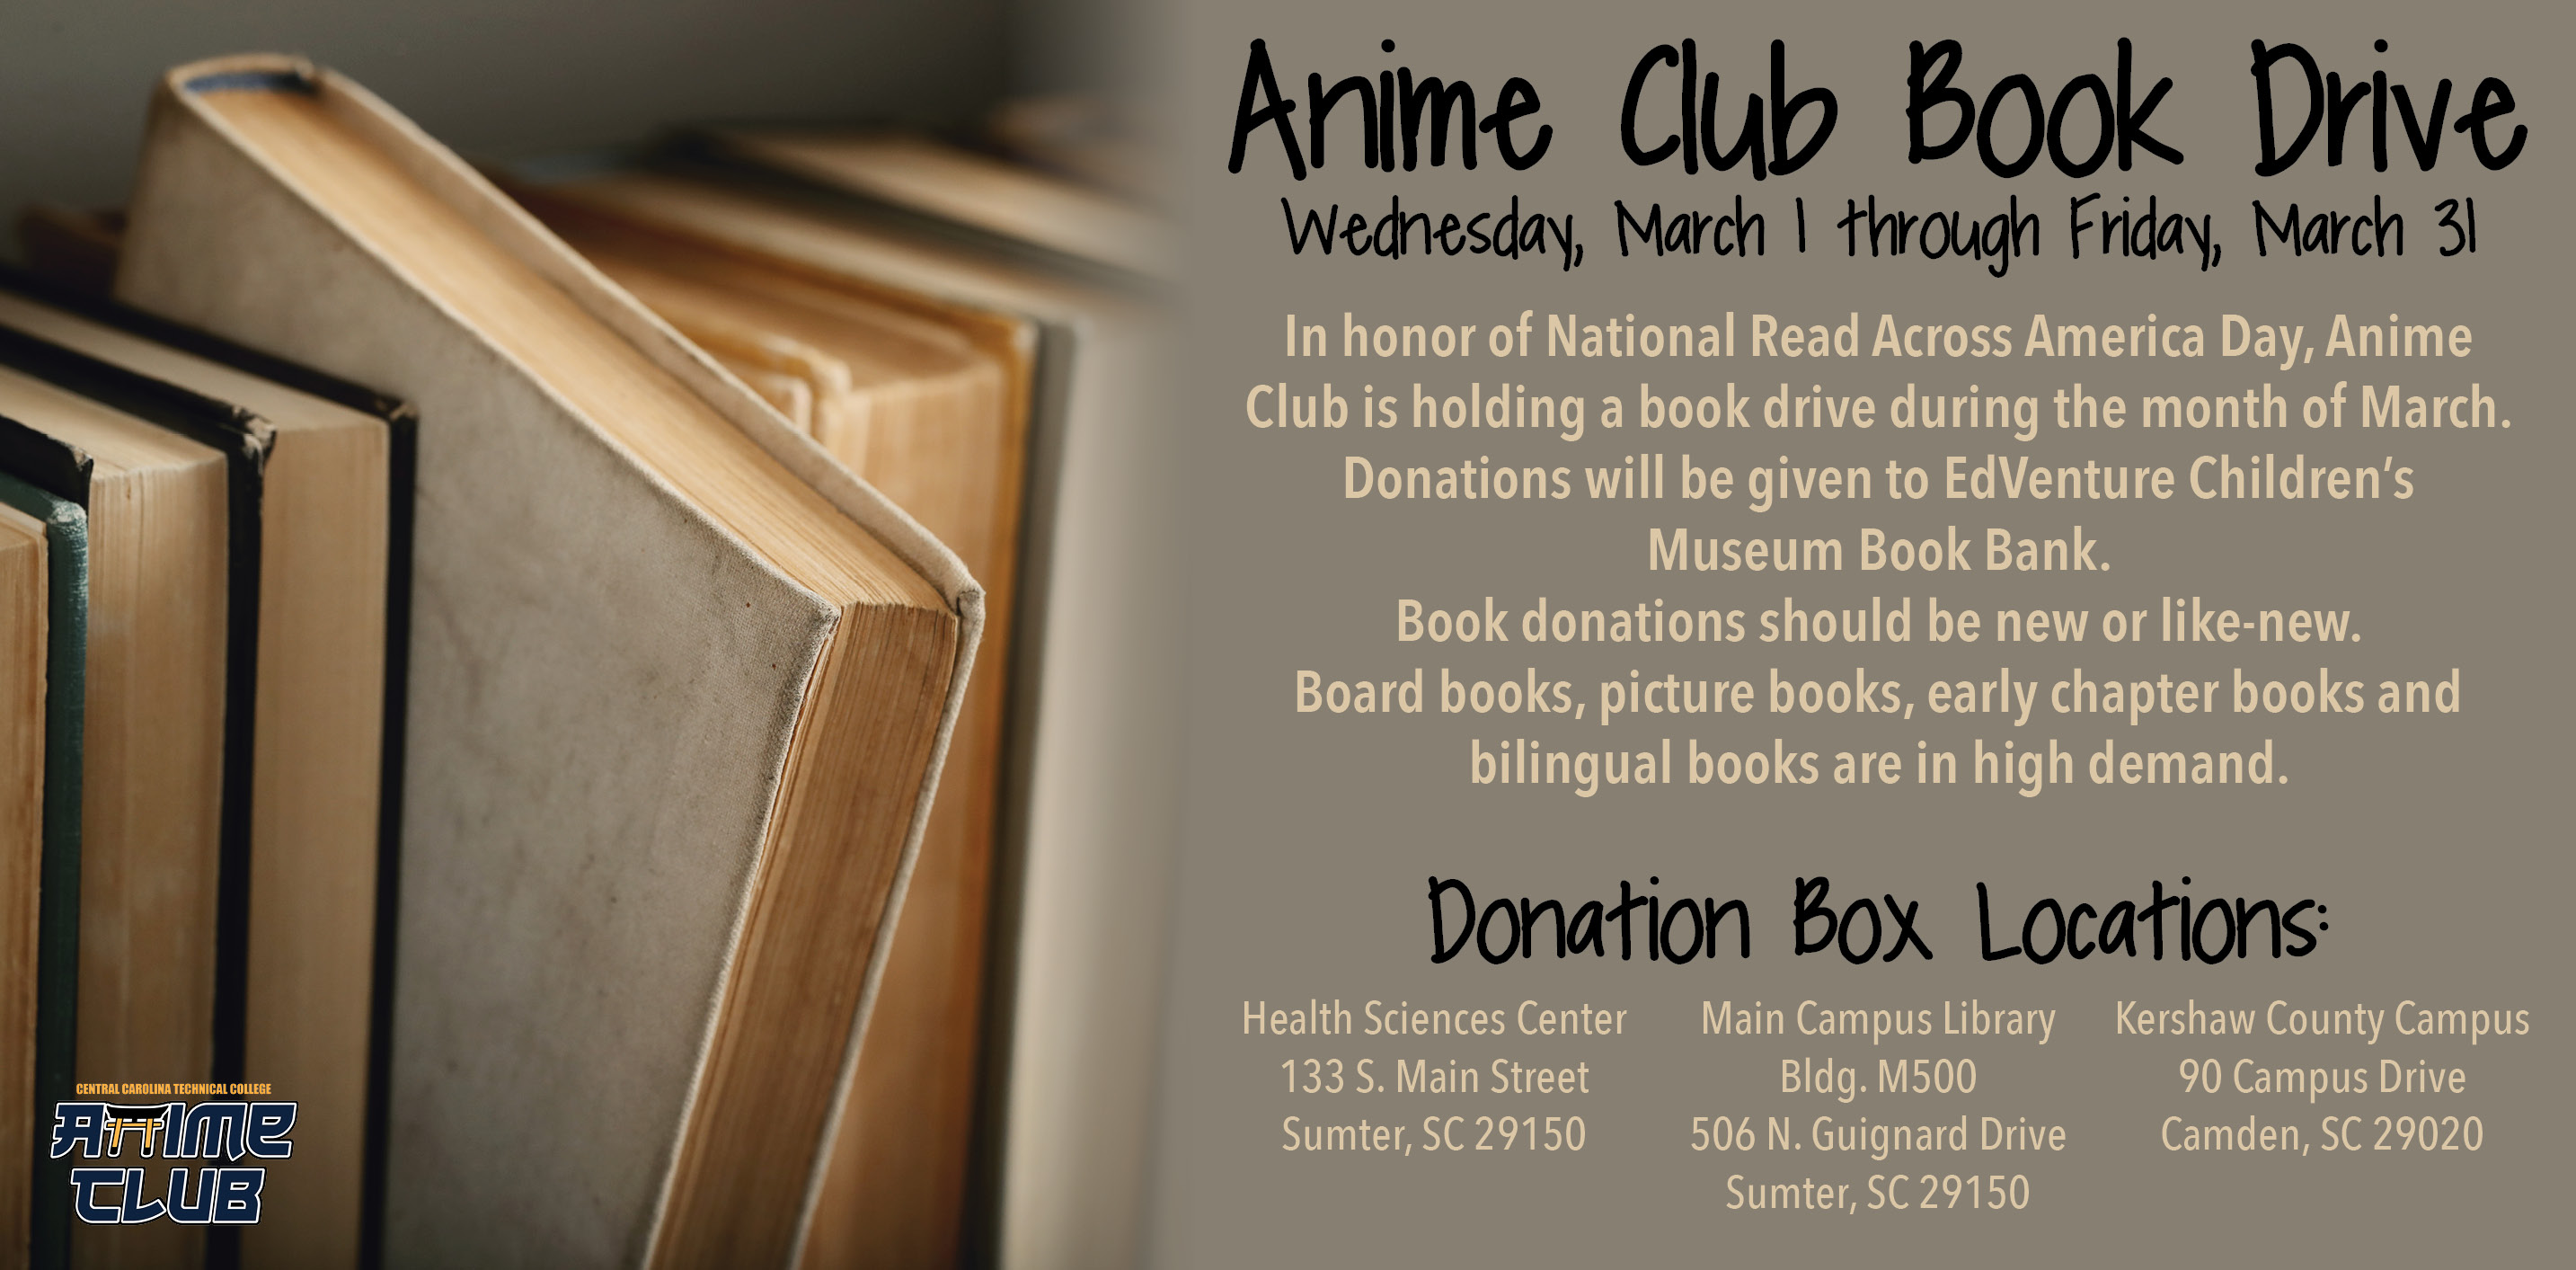 Anime club book drive